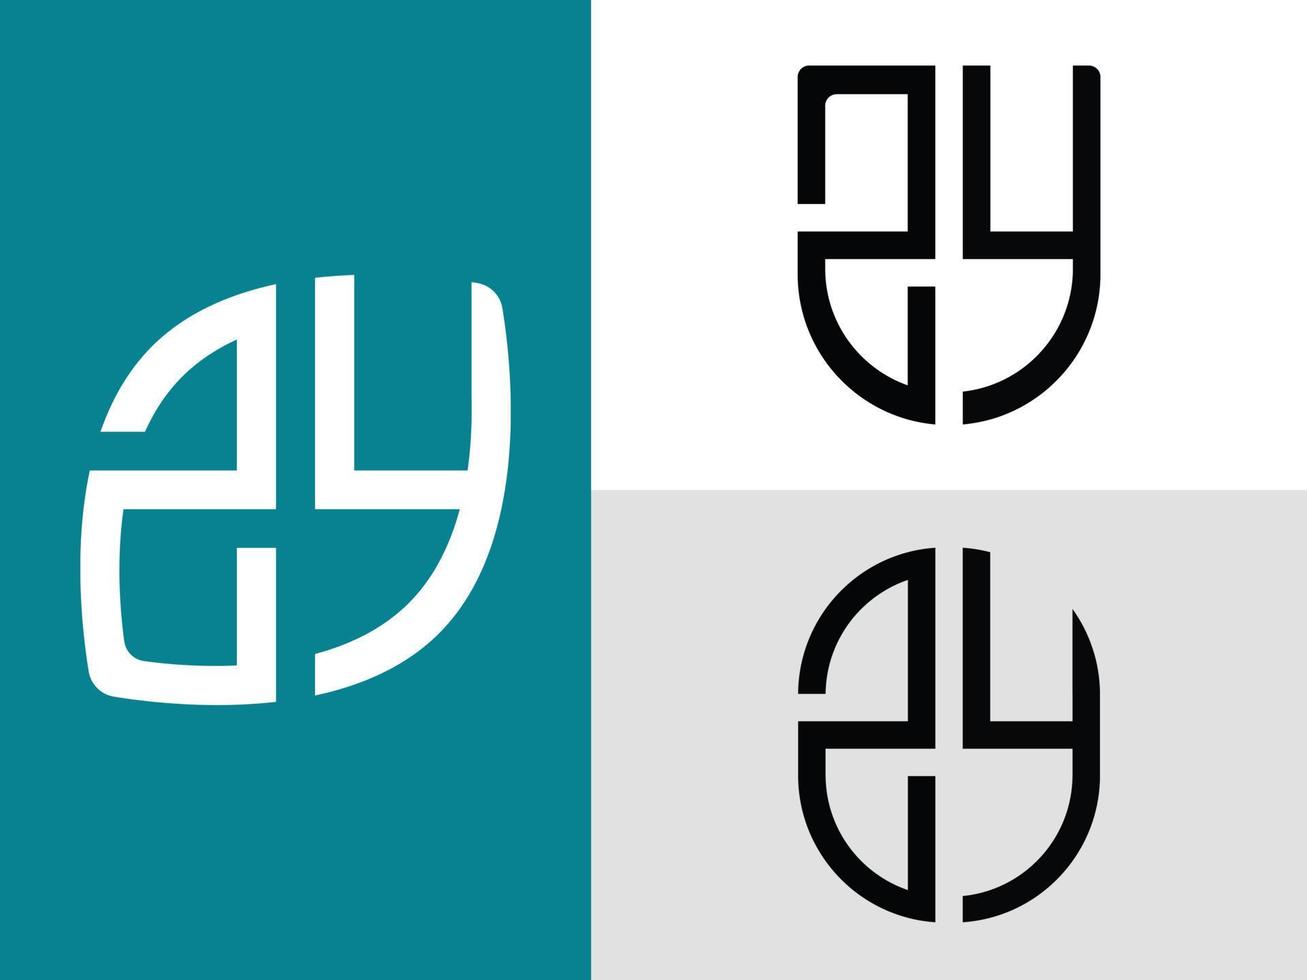 kreative anfangsbuchstaben zy logo designs paket. vektor